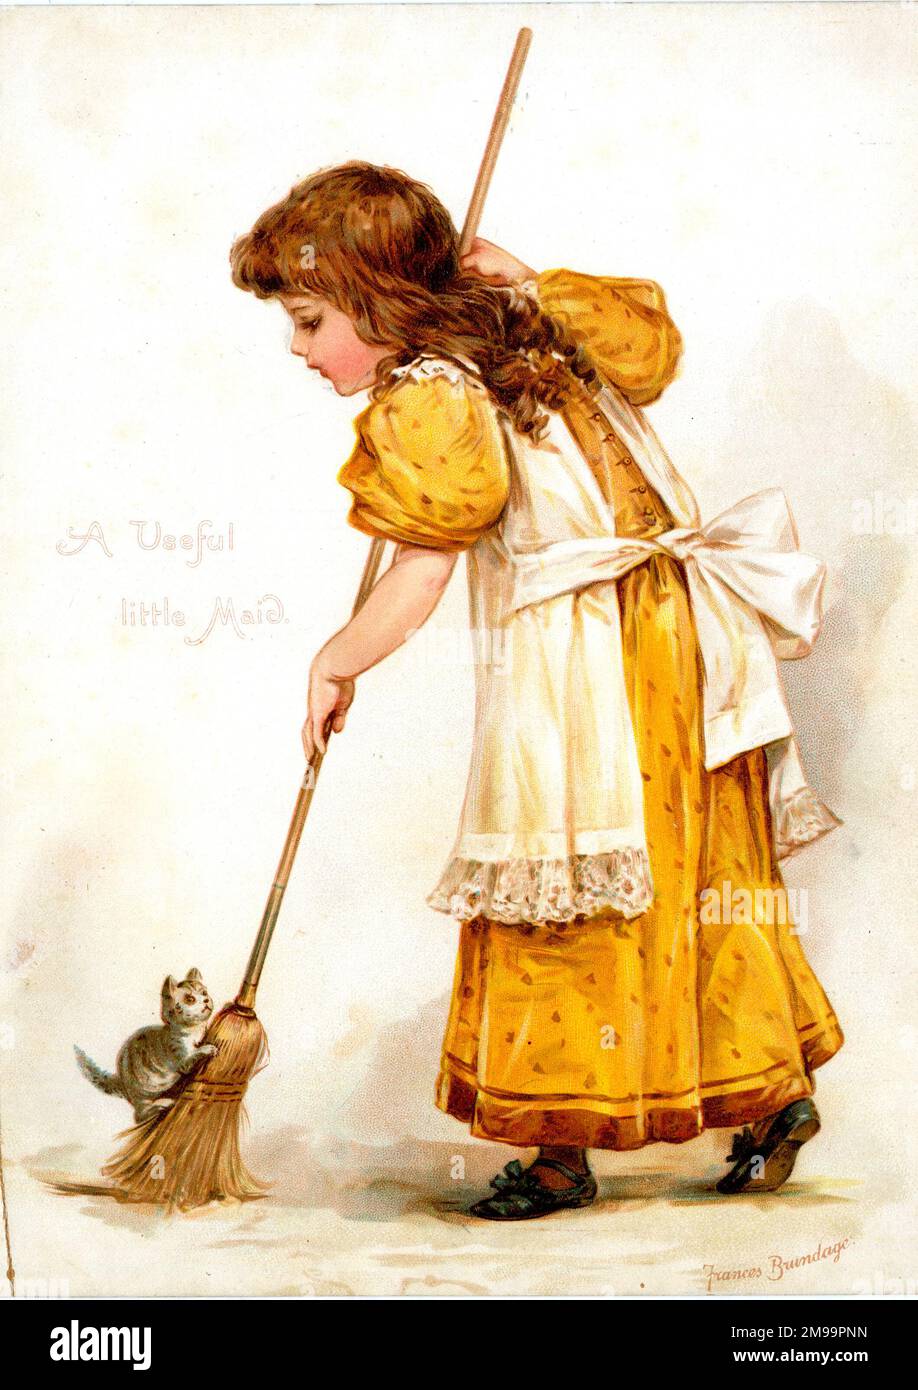 The Useful Little Maid by Frances Brundage. Stock Photo